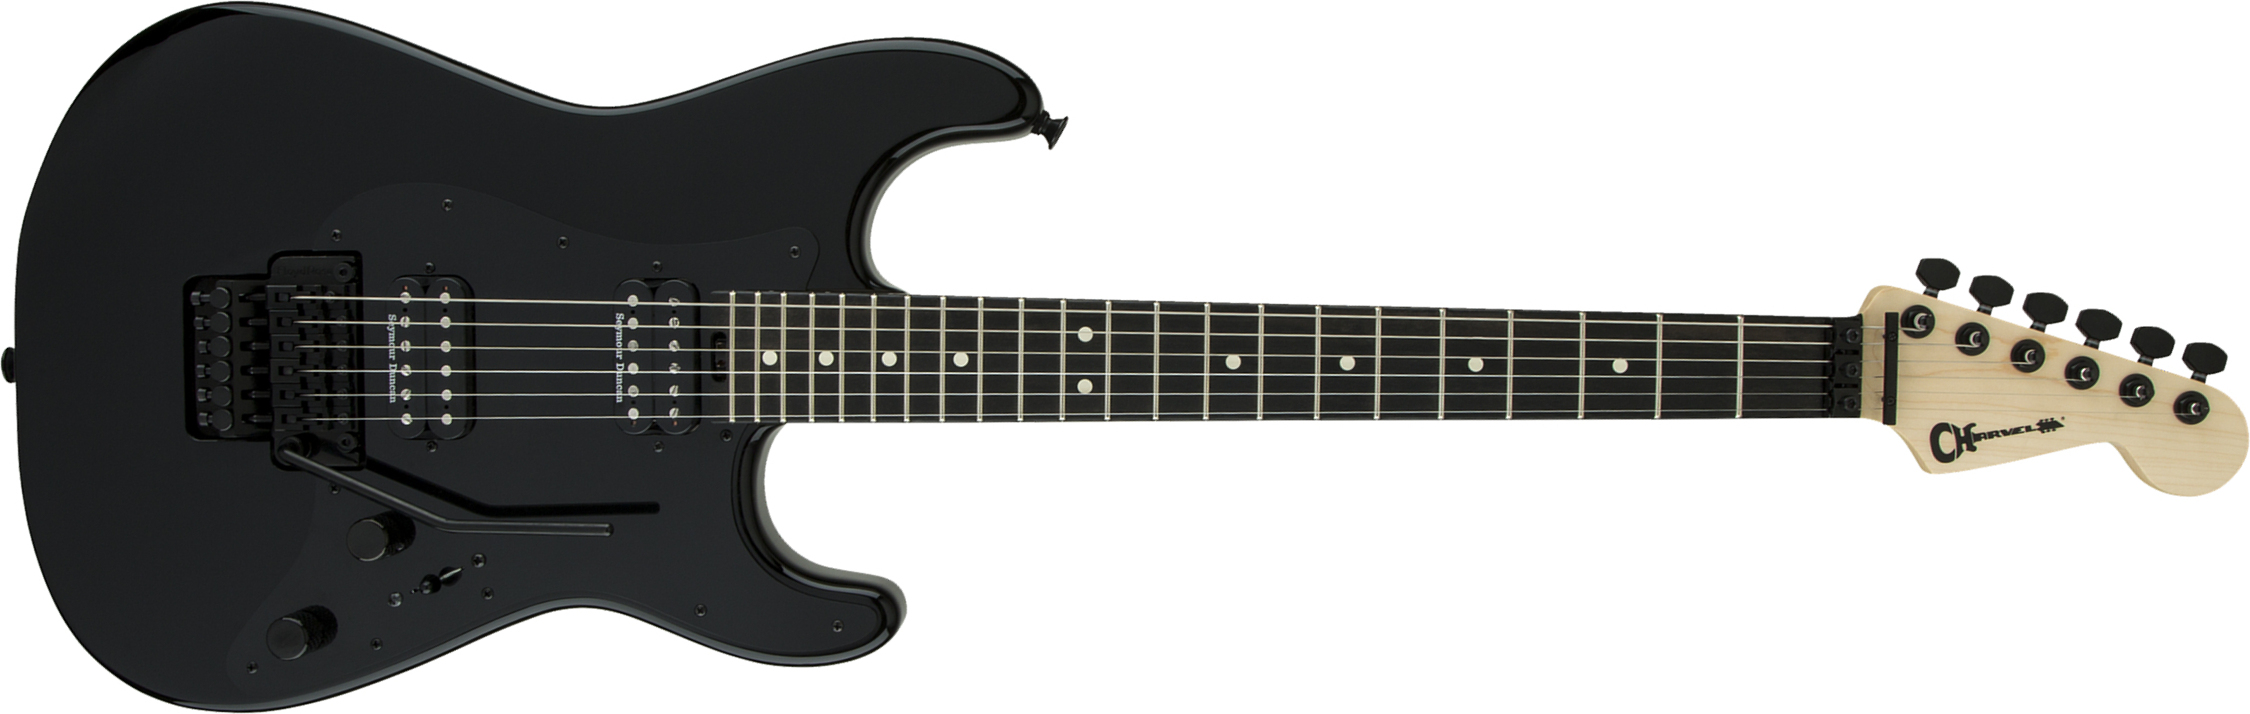 Charvel So-cal Style 1 Hh Fr E Pro-mod 2h Seymour Duncan Eb - Black - Str shape electric guitar - Main picture